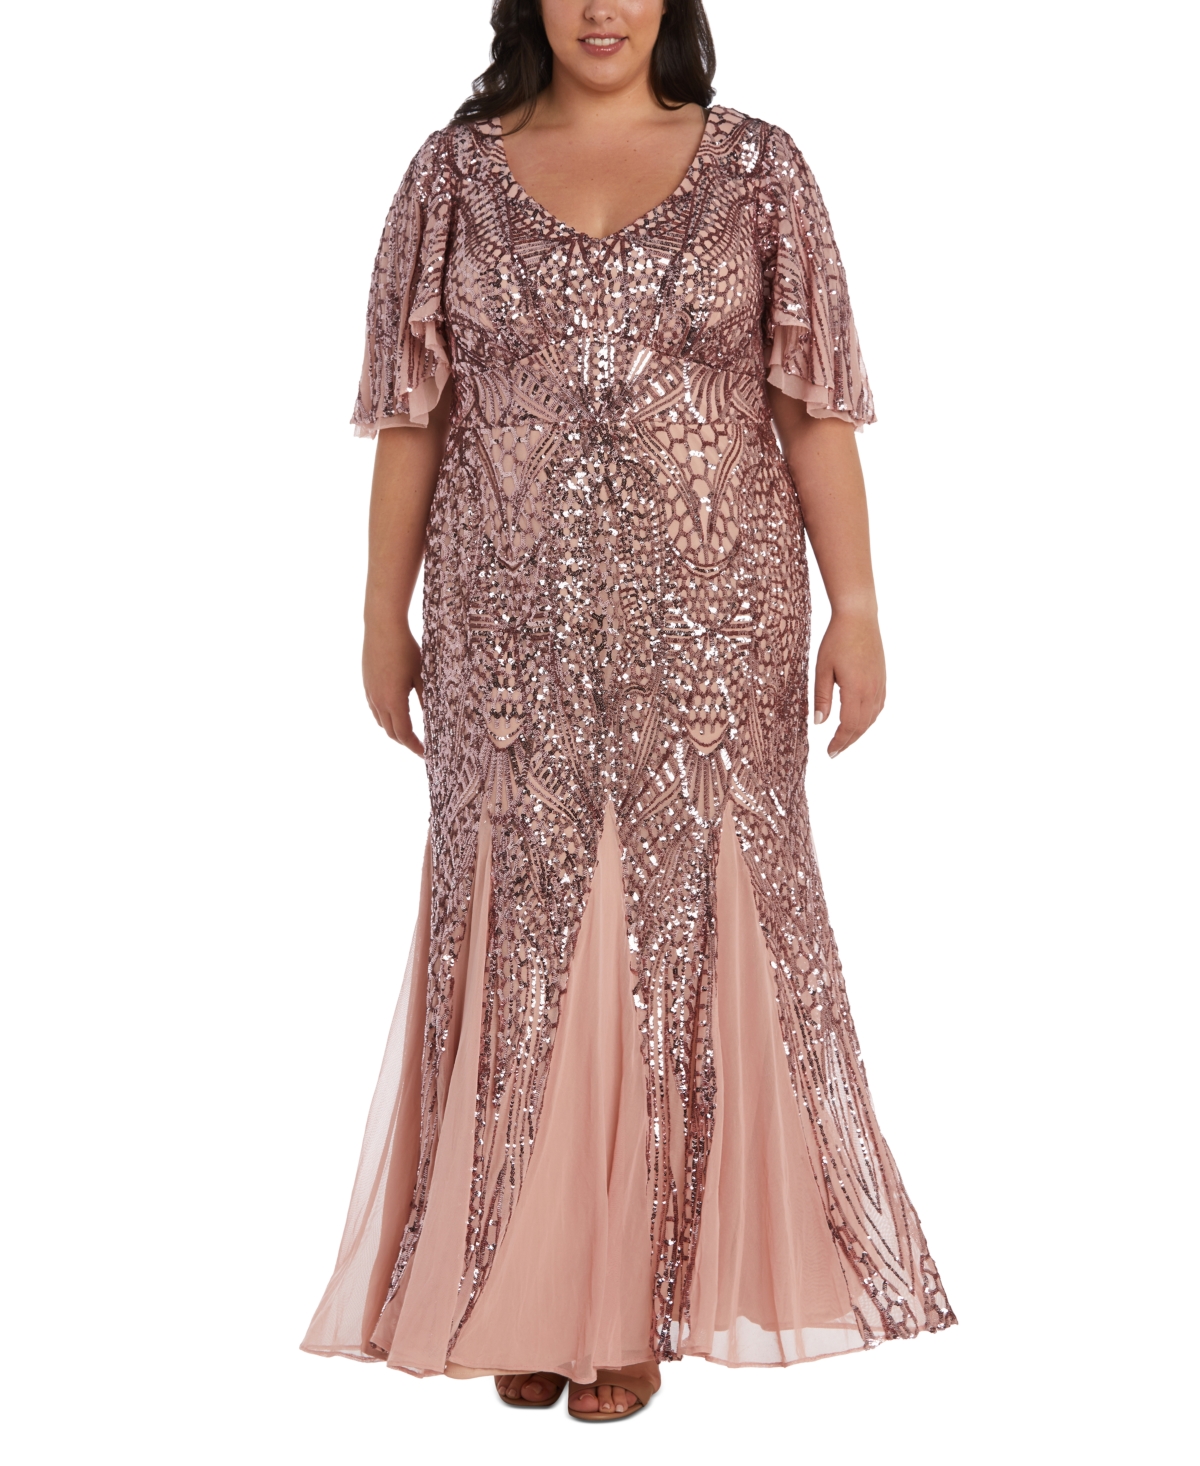 1920s Downton Abbey Dresses Nightway Plus Size Sequin Flutter-Sleeve Godet Gown - Mauve $209.00 AT vintagedancer.com